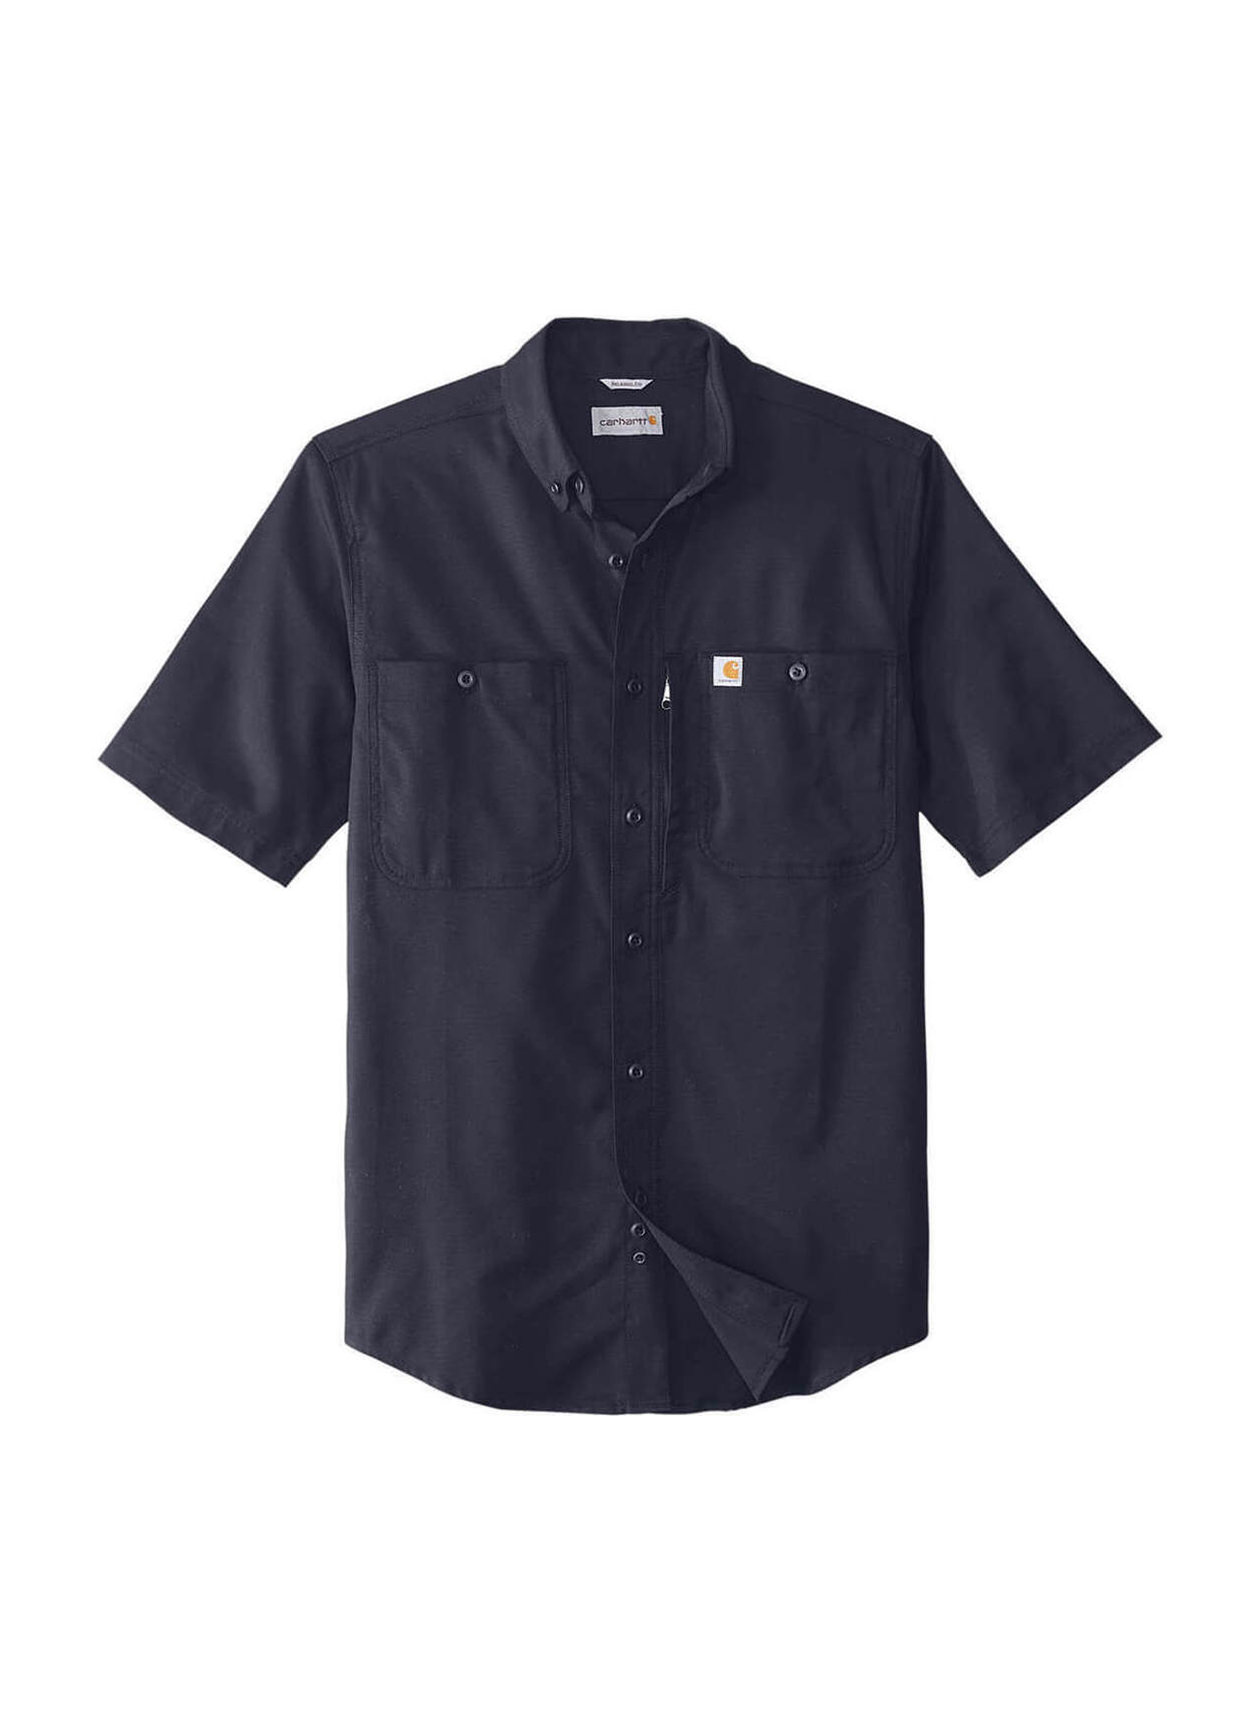 Company Carhartt Men's Navy Rugged Professional Series Short-Sleeve Shirt